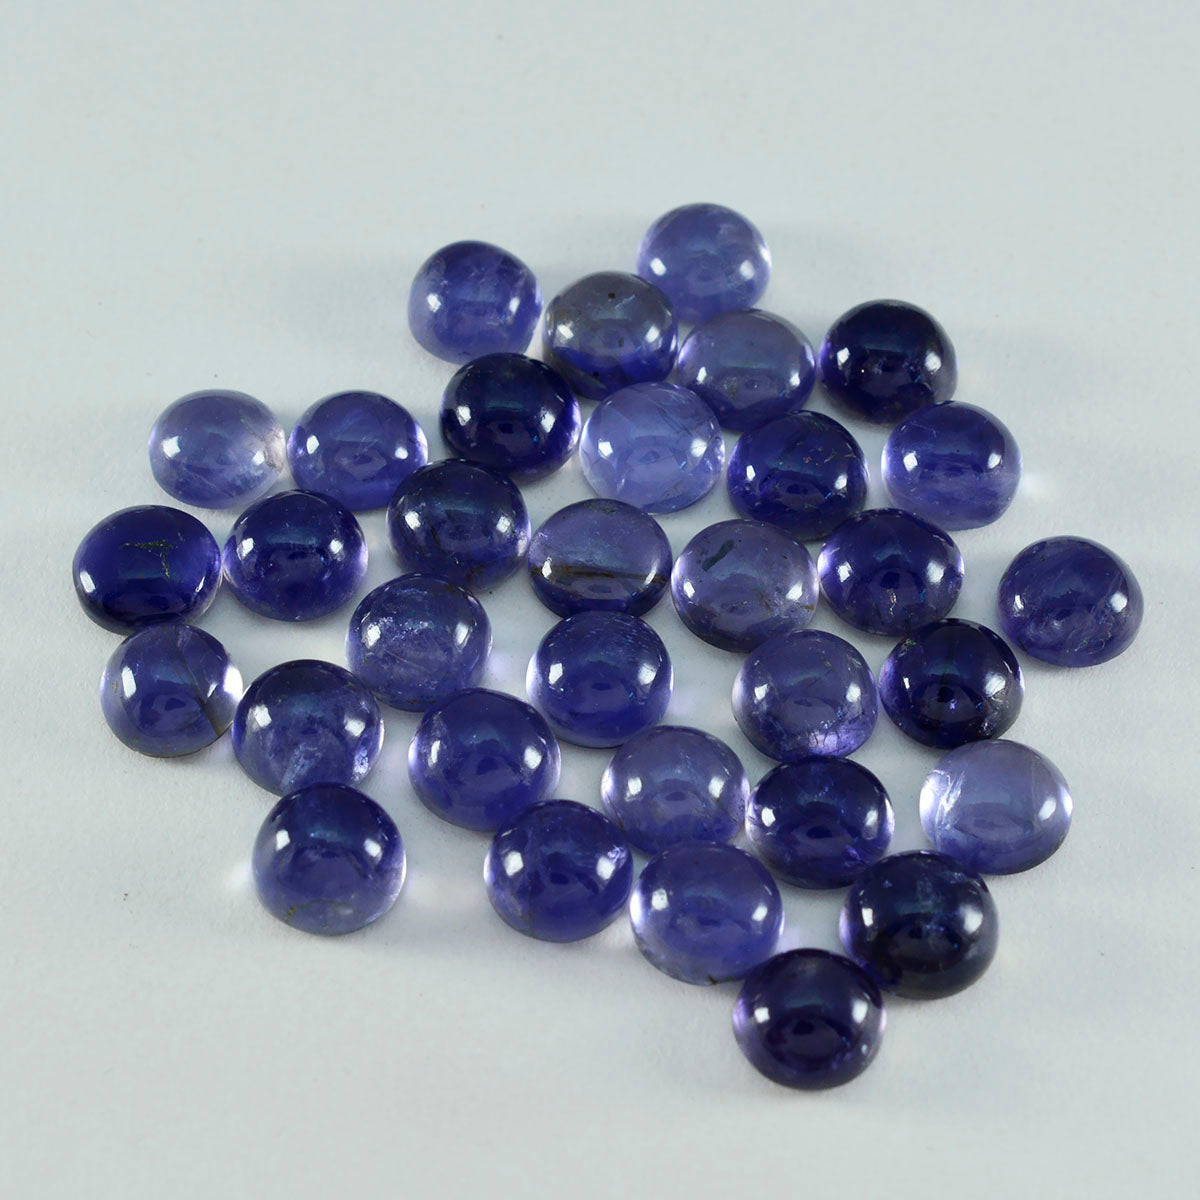 Riyogems 1PC Blue Iolite Cabochon 8x8 mm Round Shape A+1 Quality Loose Gems